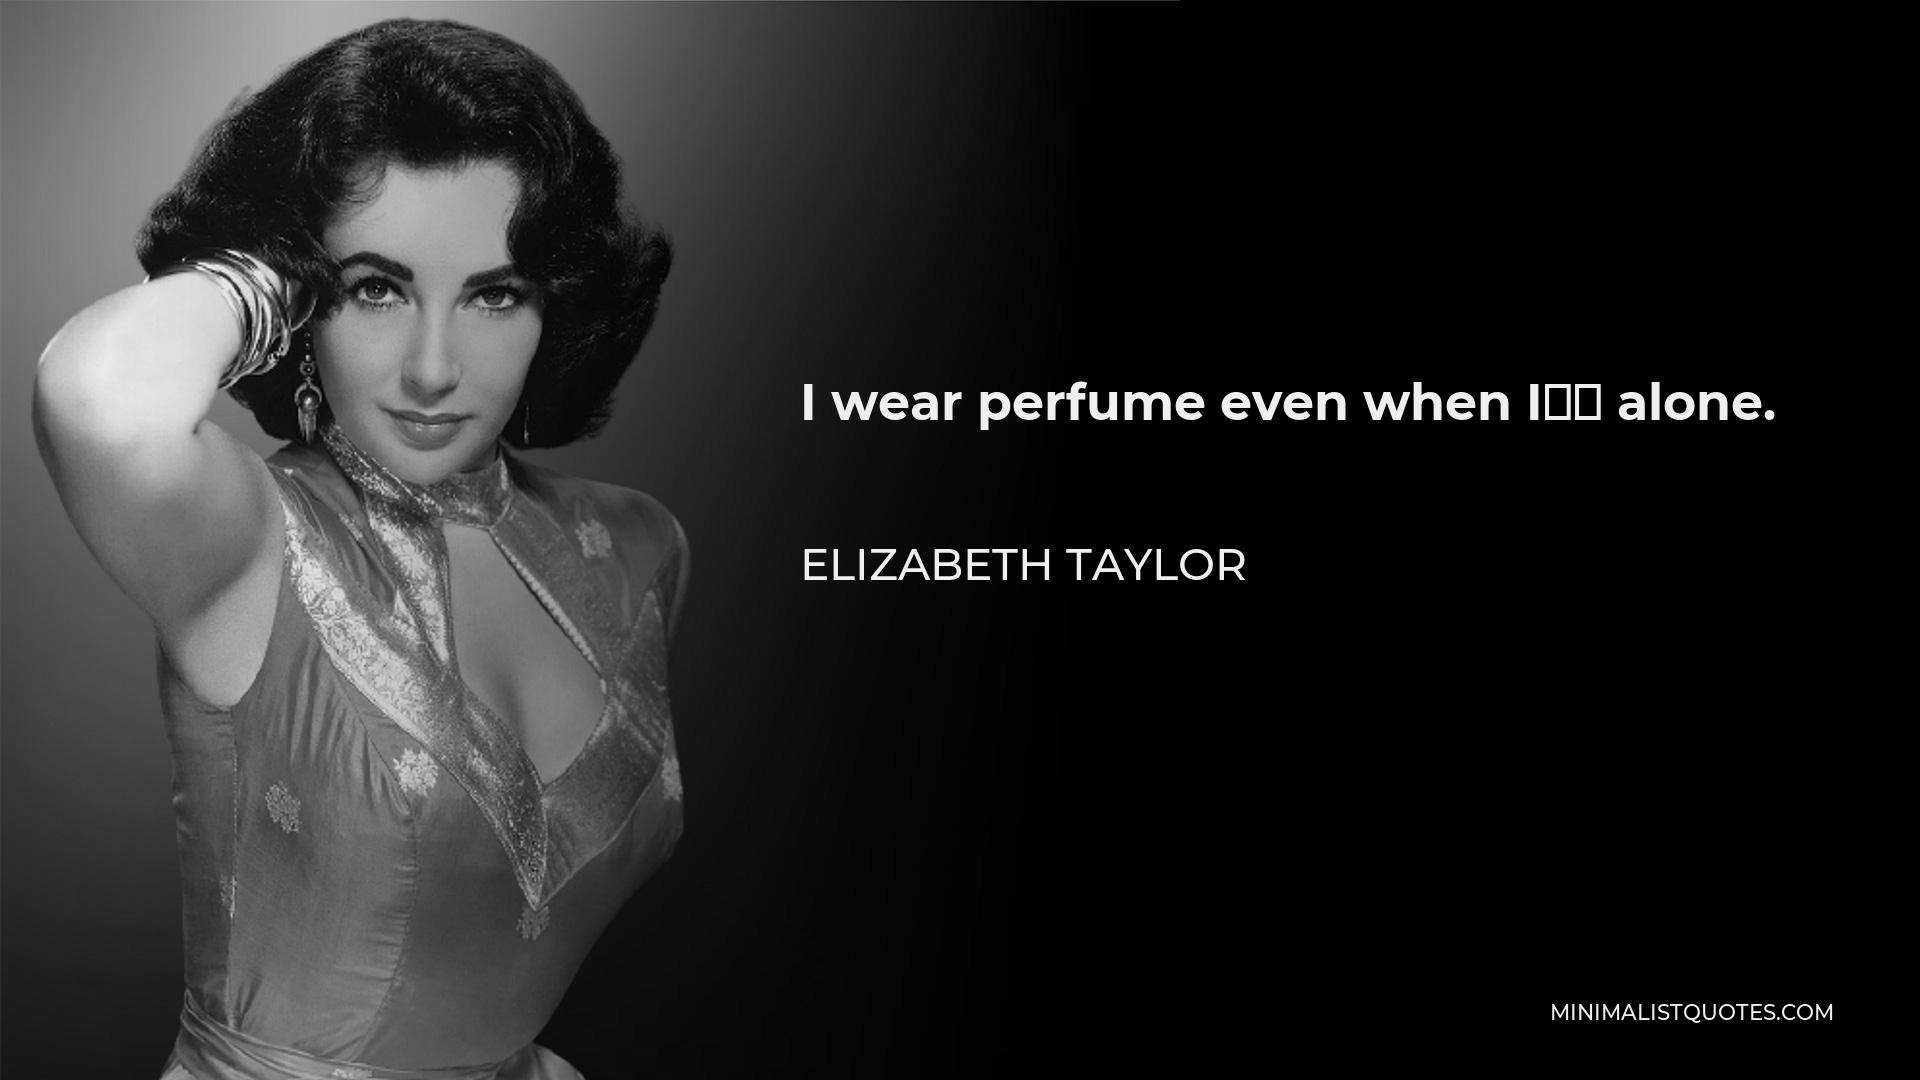 Elizabeth Taylor Quote - I wear perfume even when I’m alone.